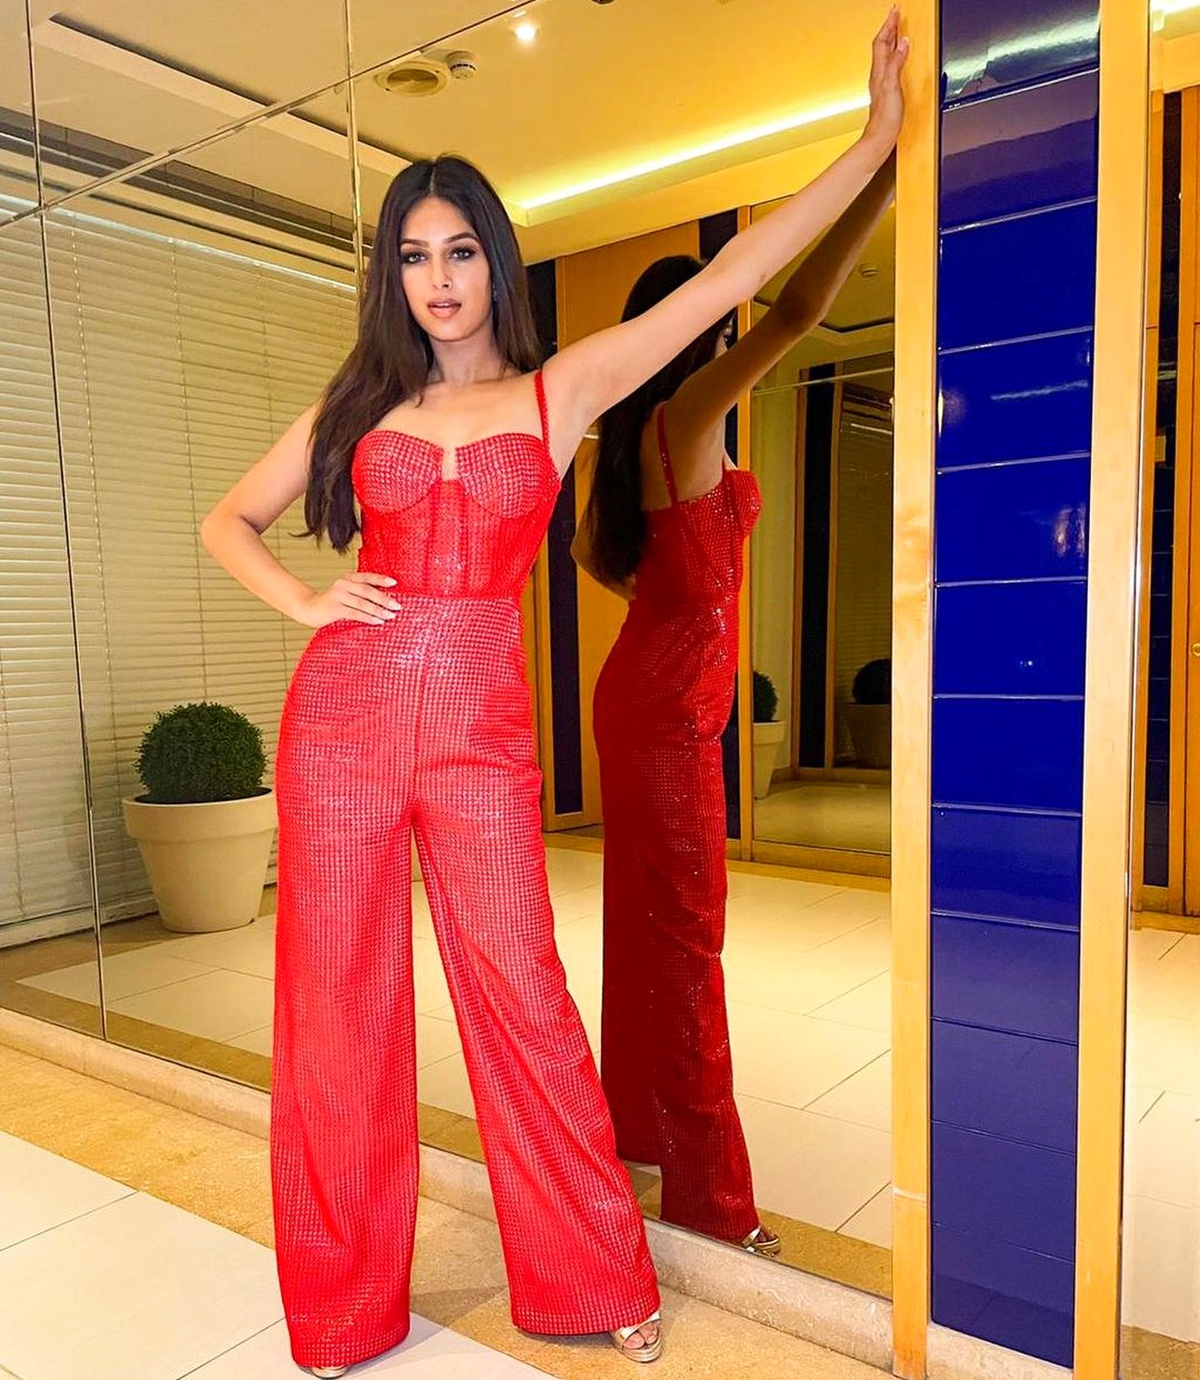 Miss Universe 2021 Harnaaz Sandhu suffers from Celiac disease